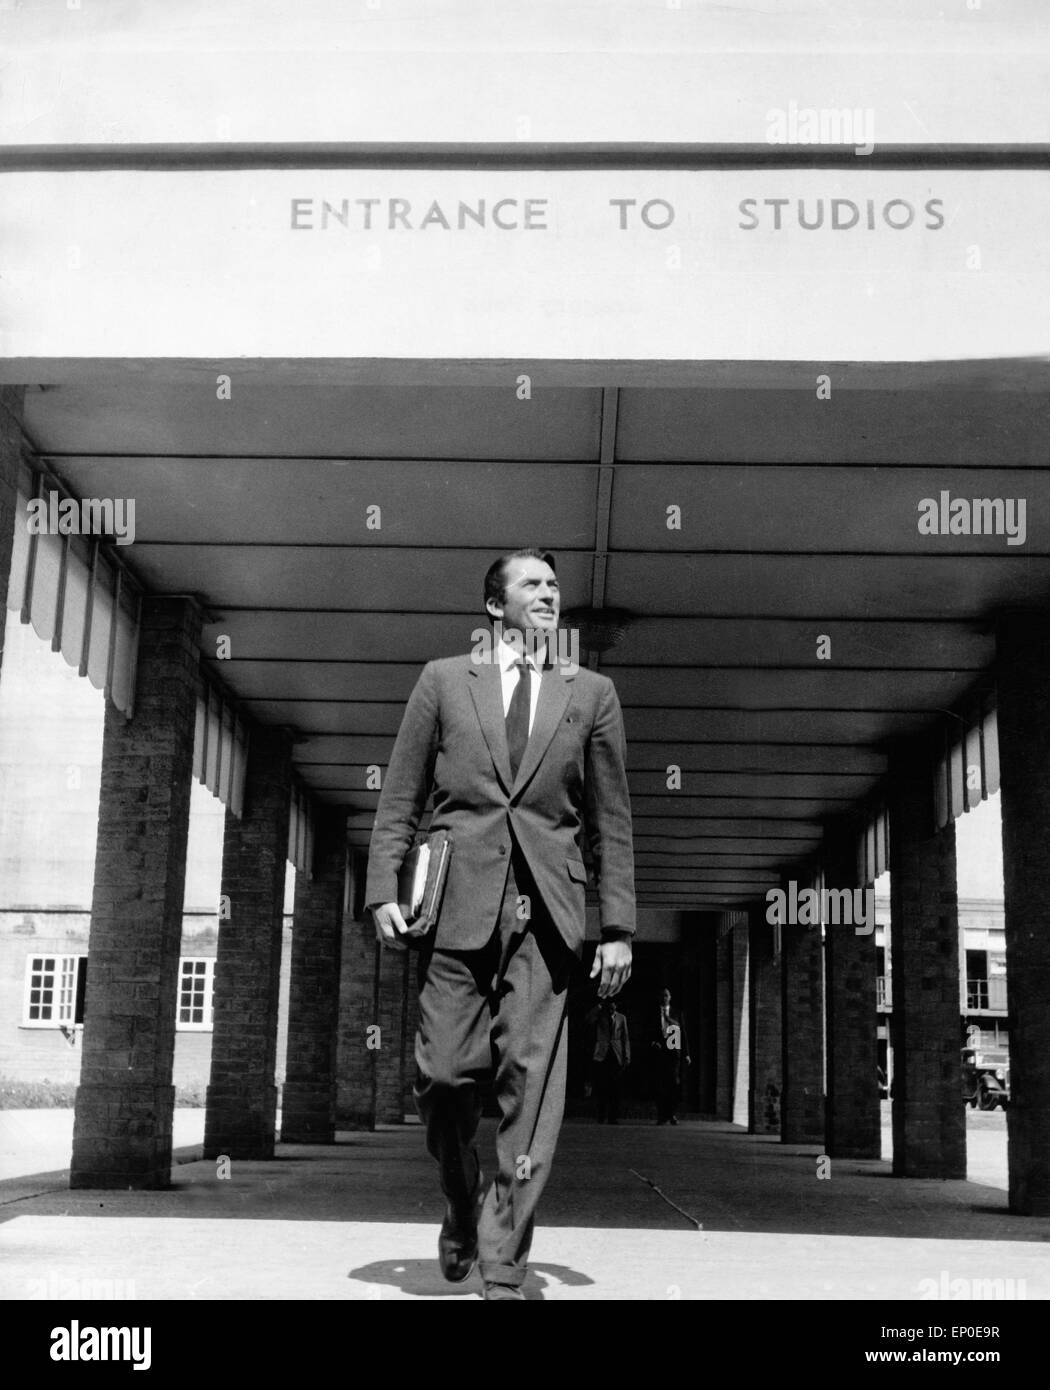 Der amerikanische Acteurs et Actrices Gregory Peck beim Verlassen der Filmstudios, Hollywood, 1950er Jahre. L'acteur américain Gregory Peck Banque D'Images